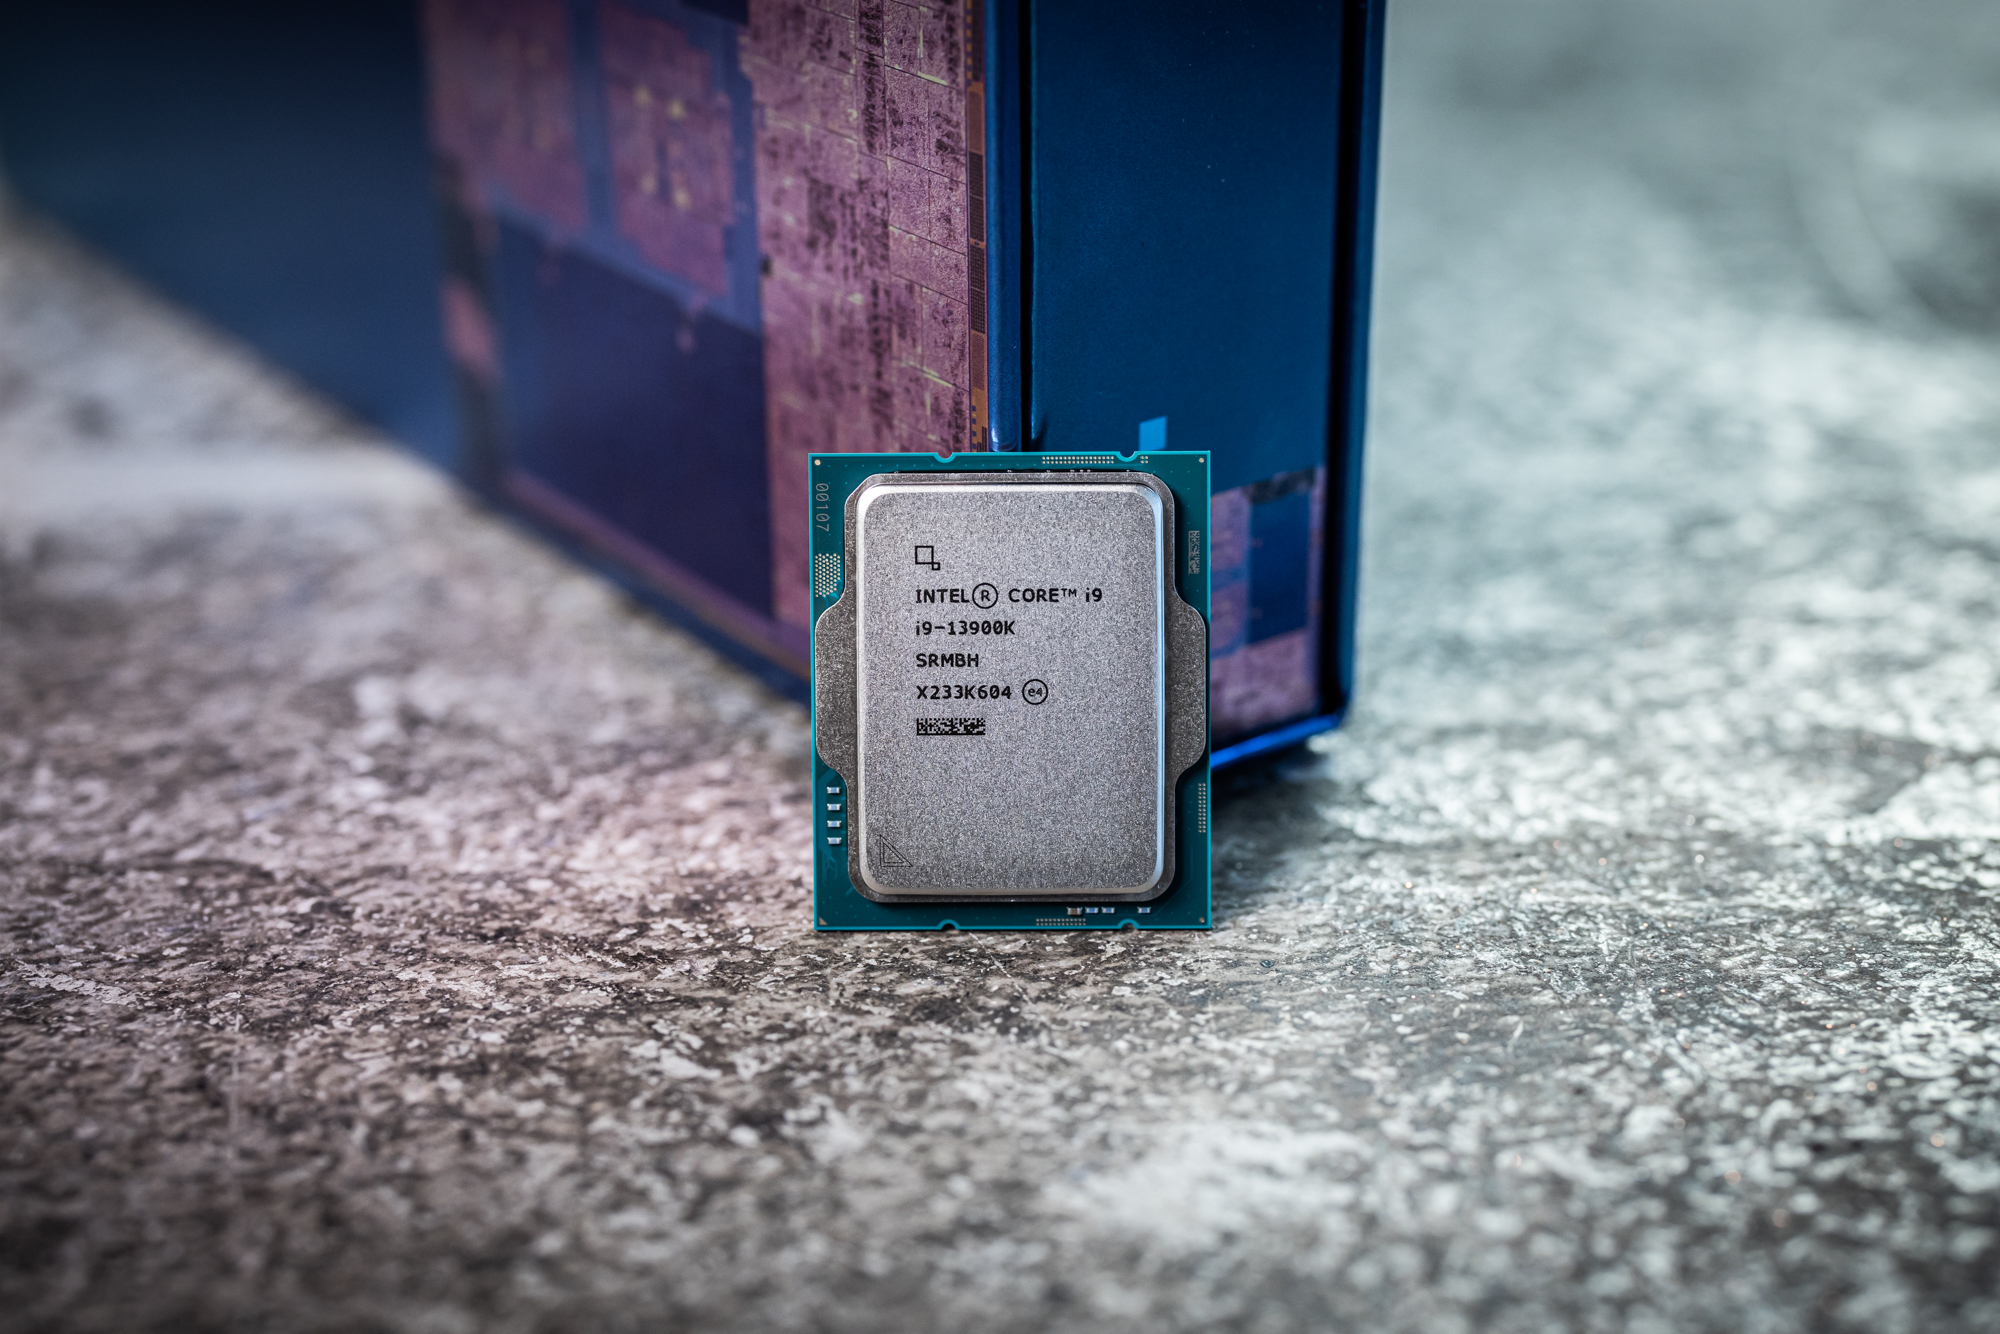 Intel Core i9-13900K - Best high-end gaming CPU